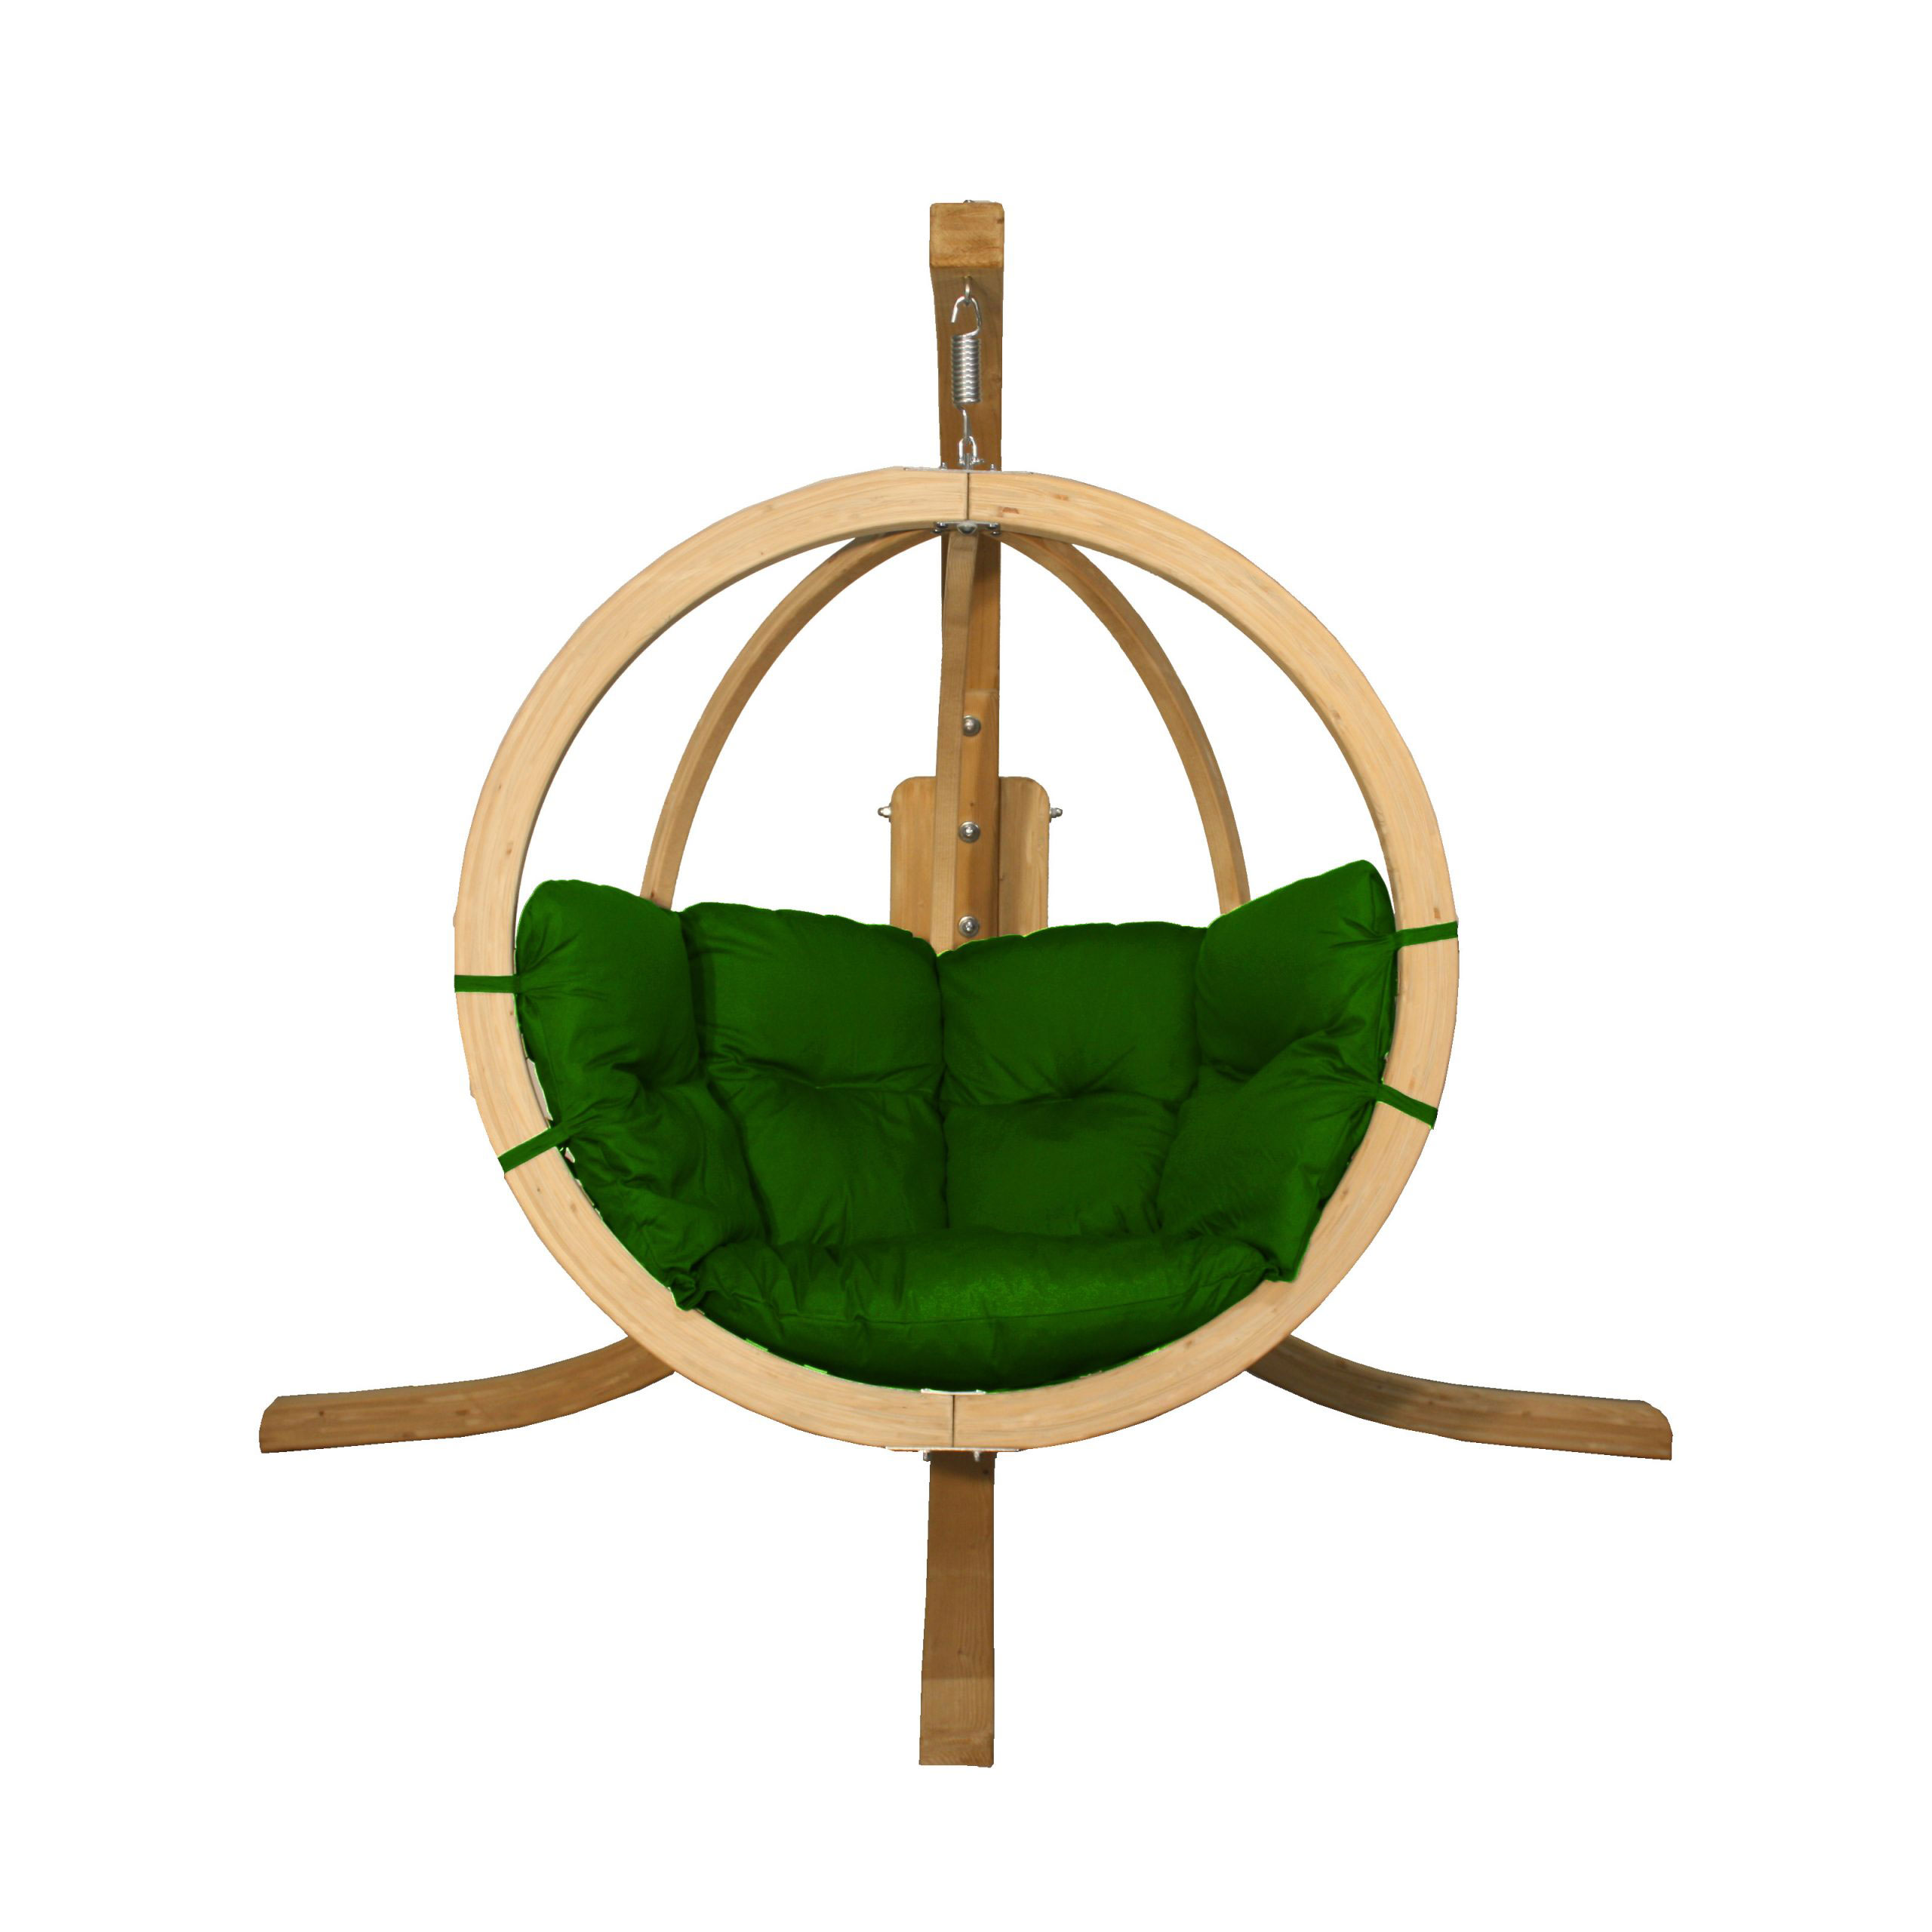 drevené hojdacie kreslo kruh zelené, drevené hojdacie kreslo kruh, drevené hojdacie kreslo zelené, závesné hojdacie kreslo, drevené závesné kreslo, drevené závesné hojdacie kreslo zelené, drevene hojdacie zavesne kreslo zelene